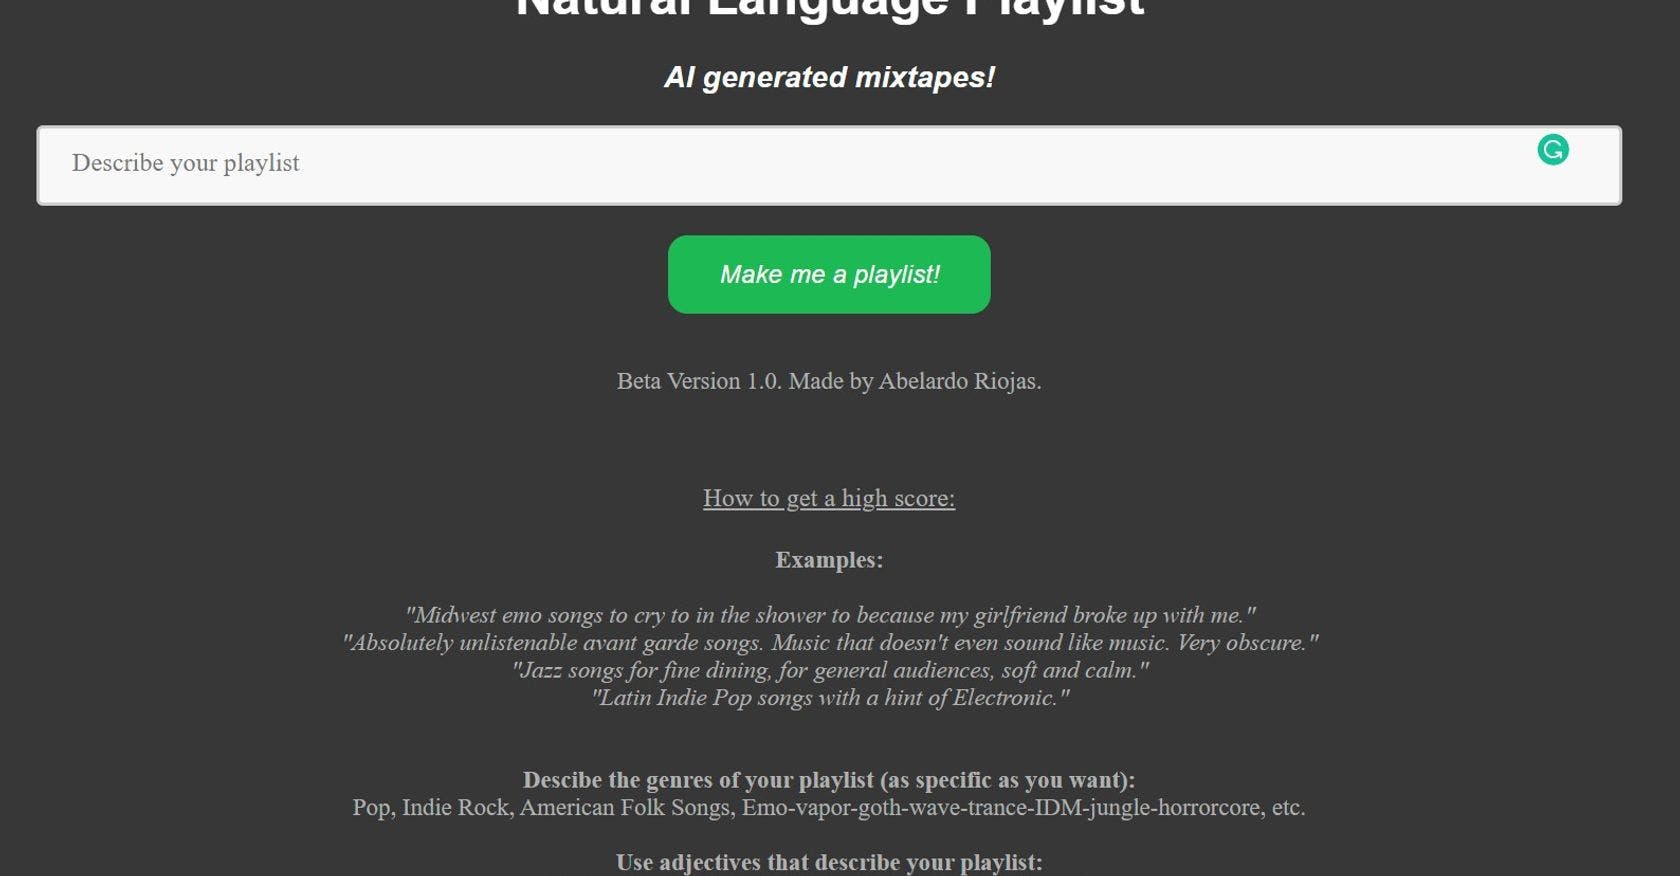 Natural Language Playlist